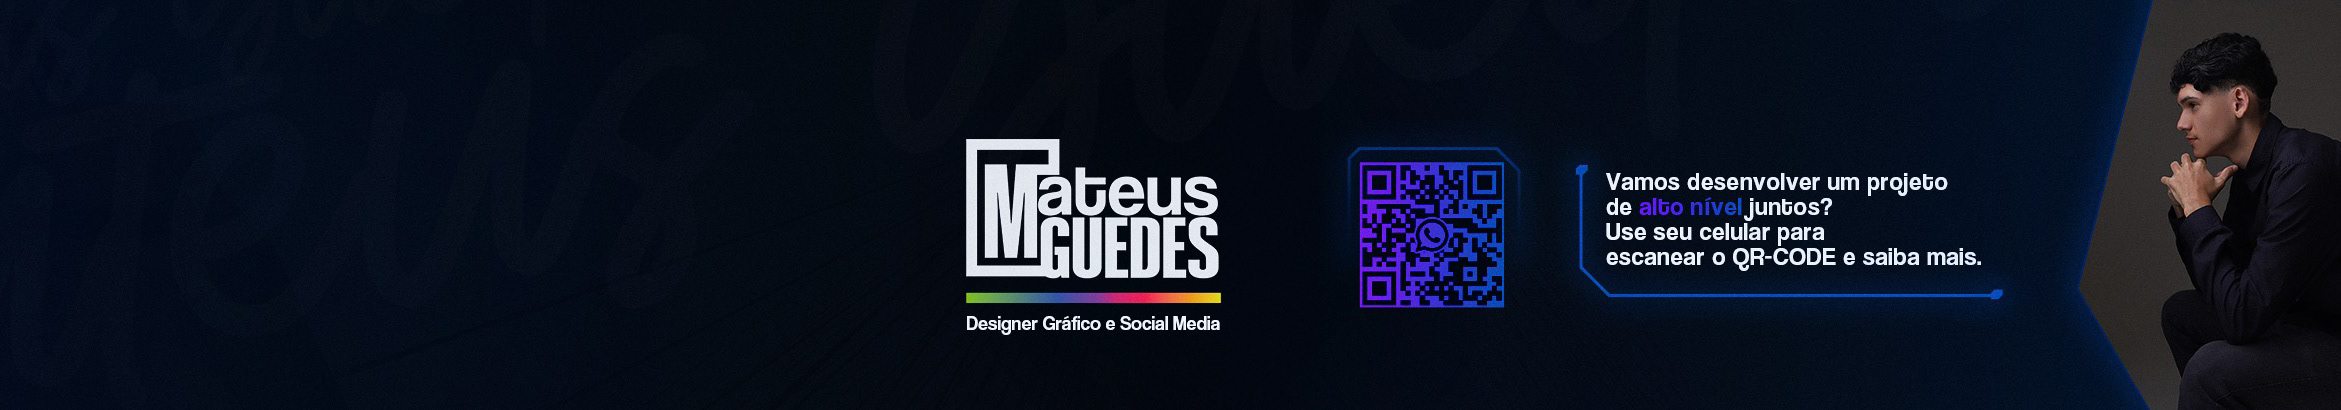 Banner del profilo di Mateus Guedes